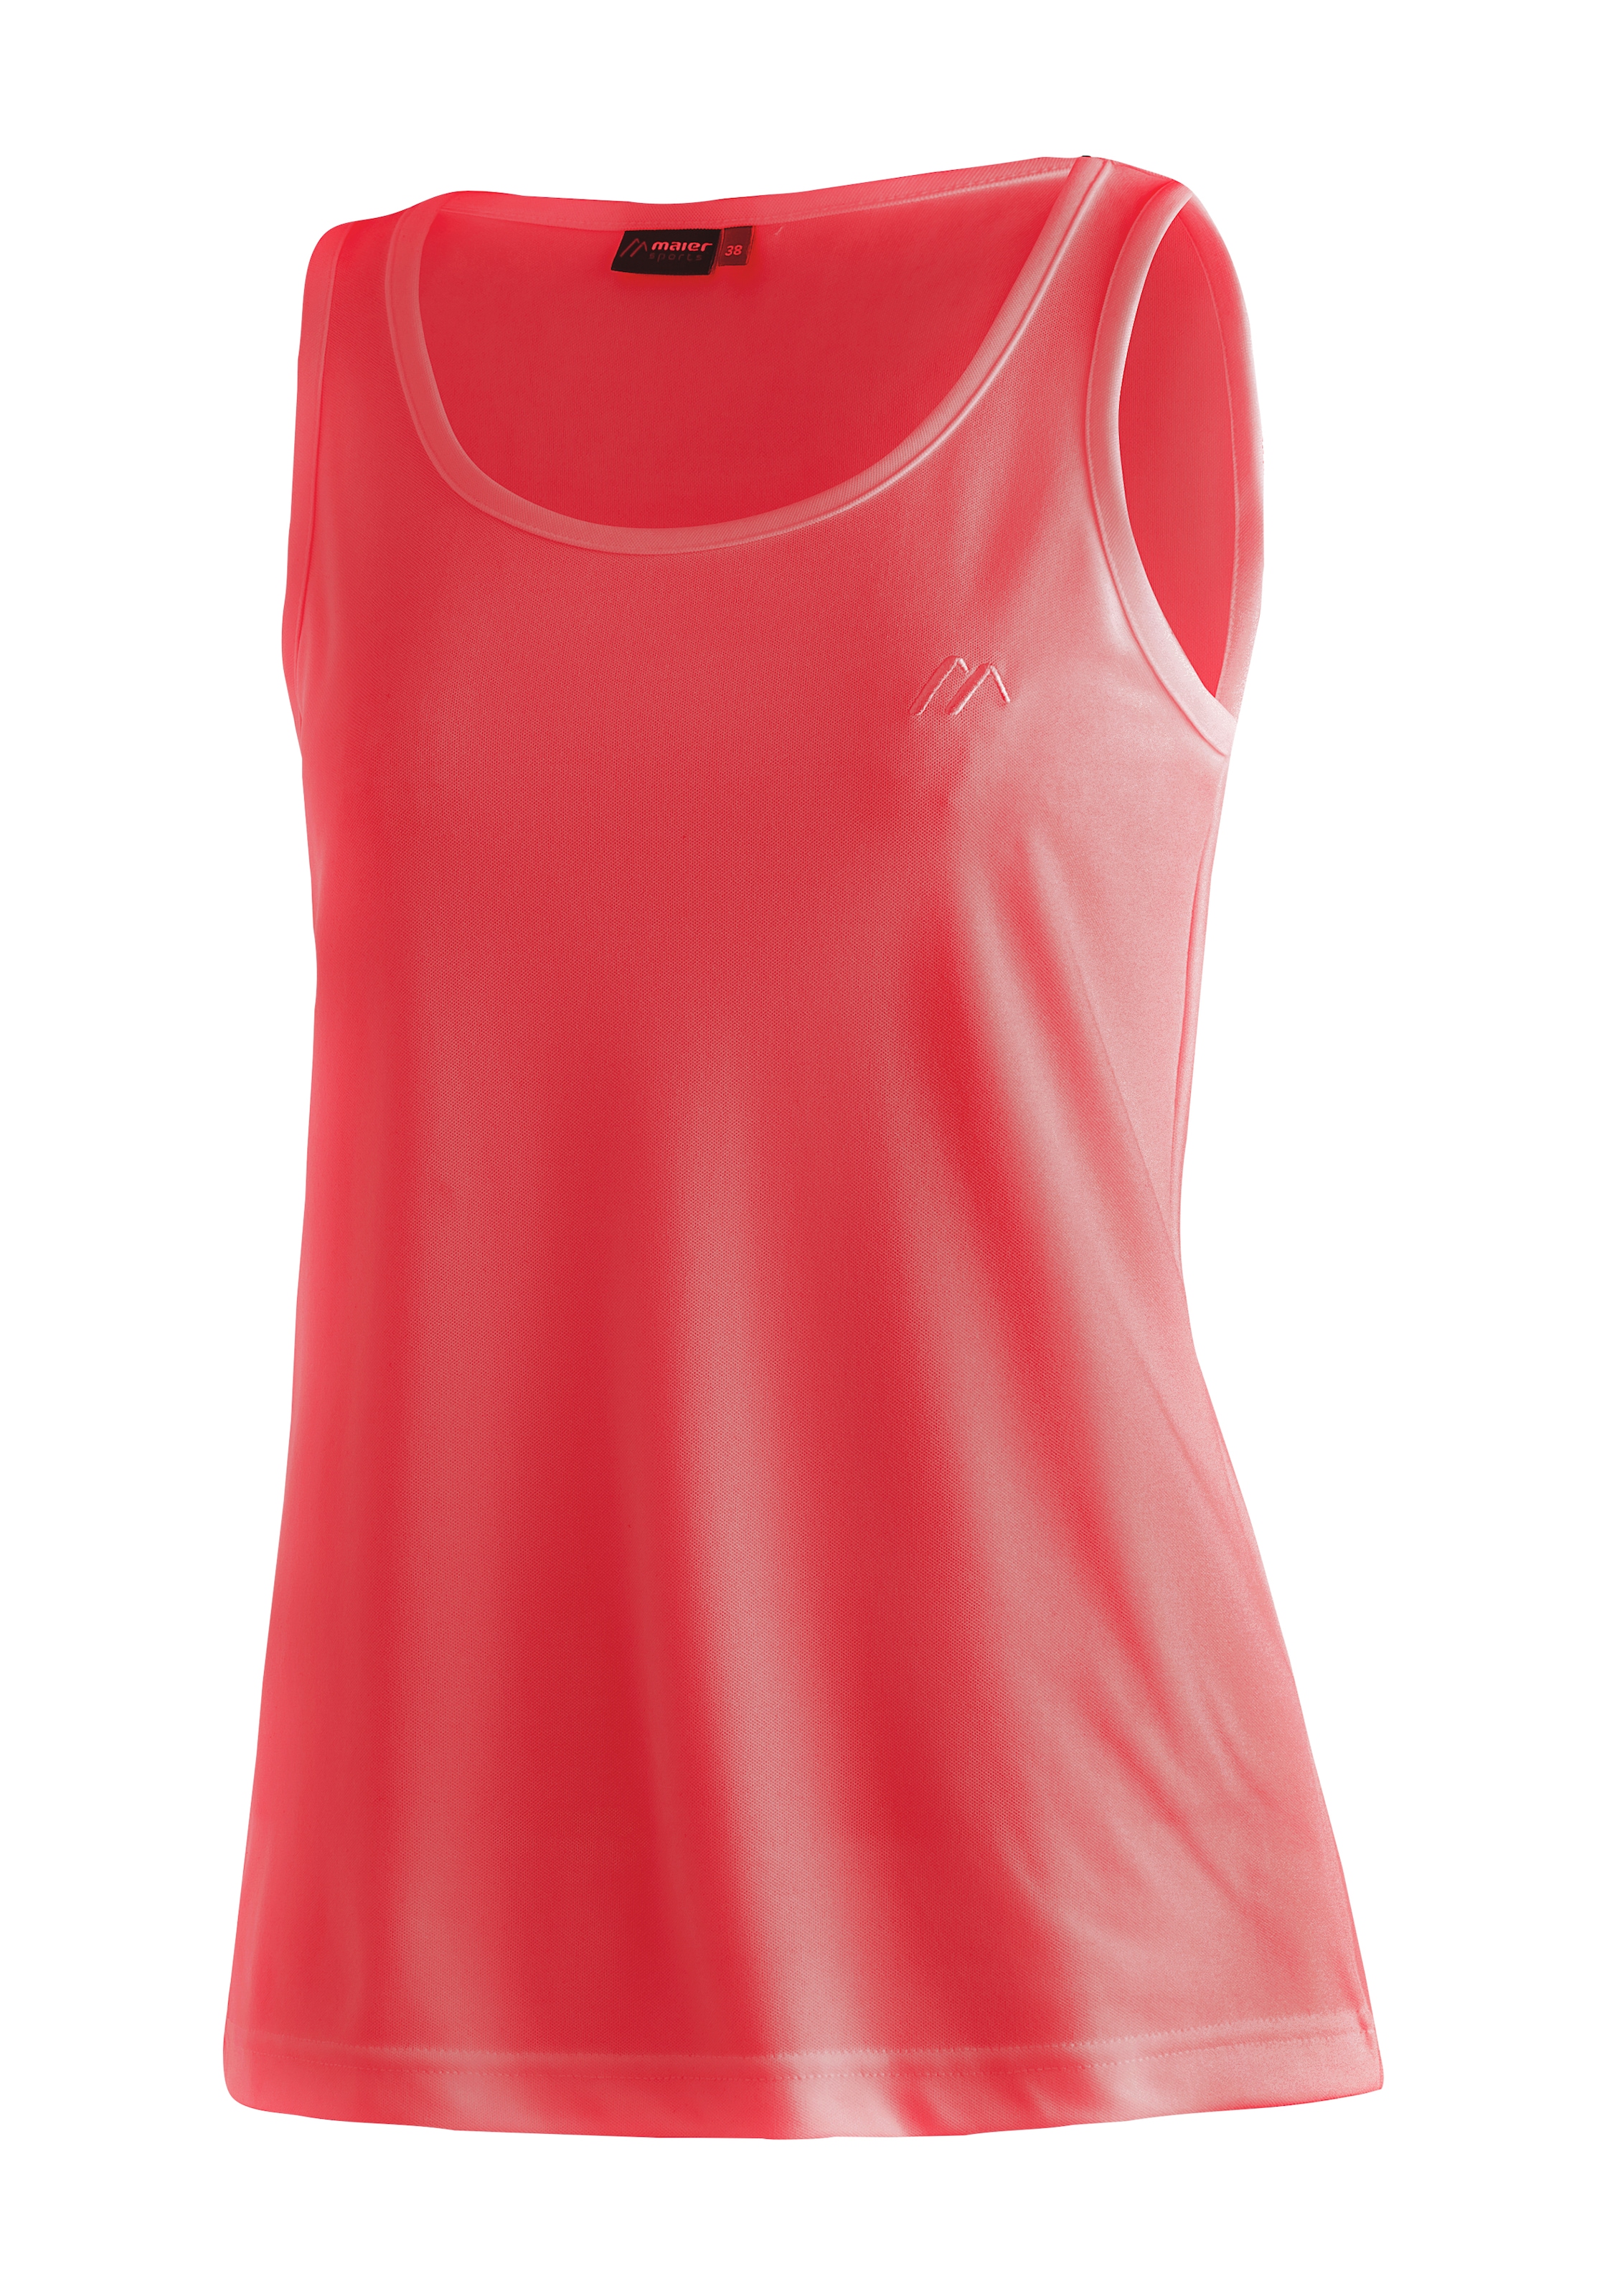 Maier Sports Funktionsshirt »Petra«, Damen für Sport kaufen und ärmelloses Shirt Outdoor-Aktivitäten, Tank-Top